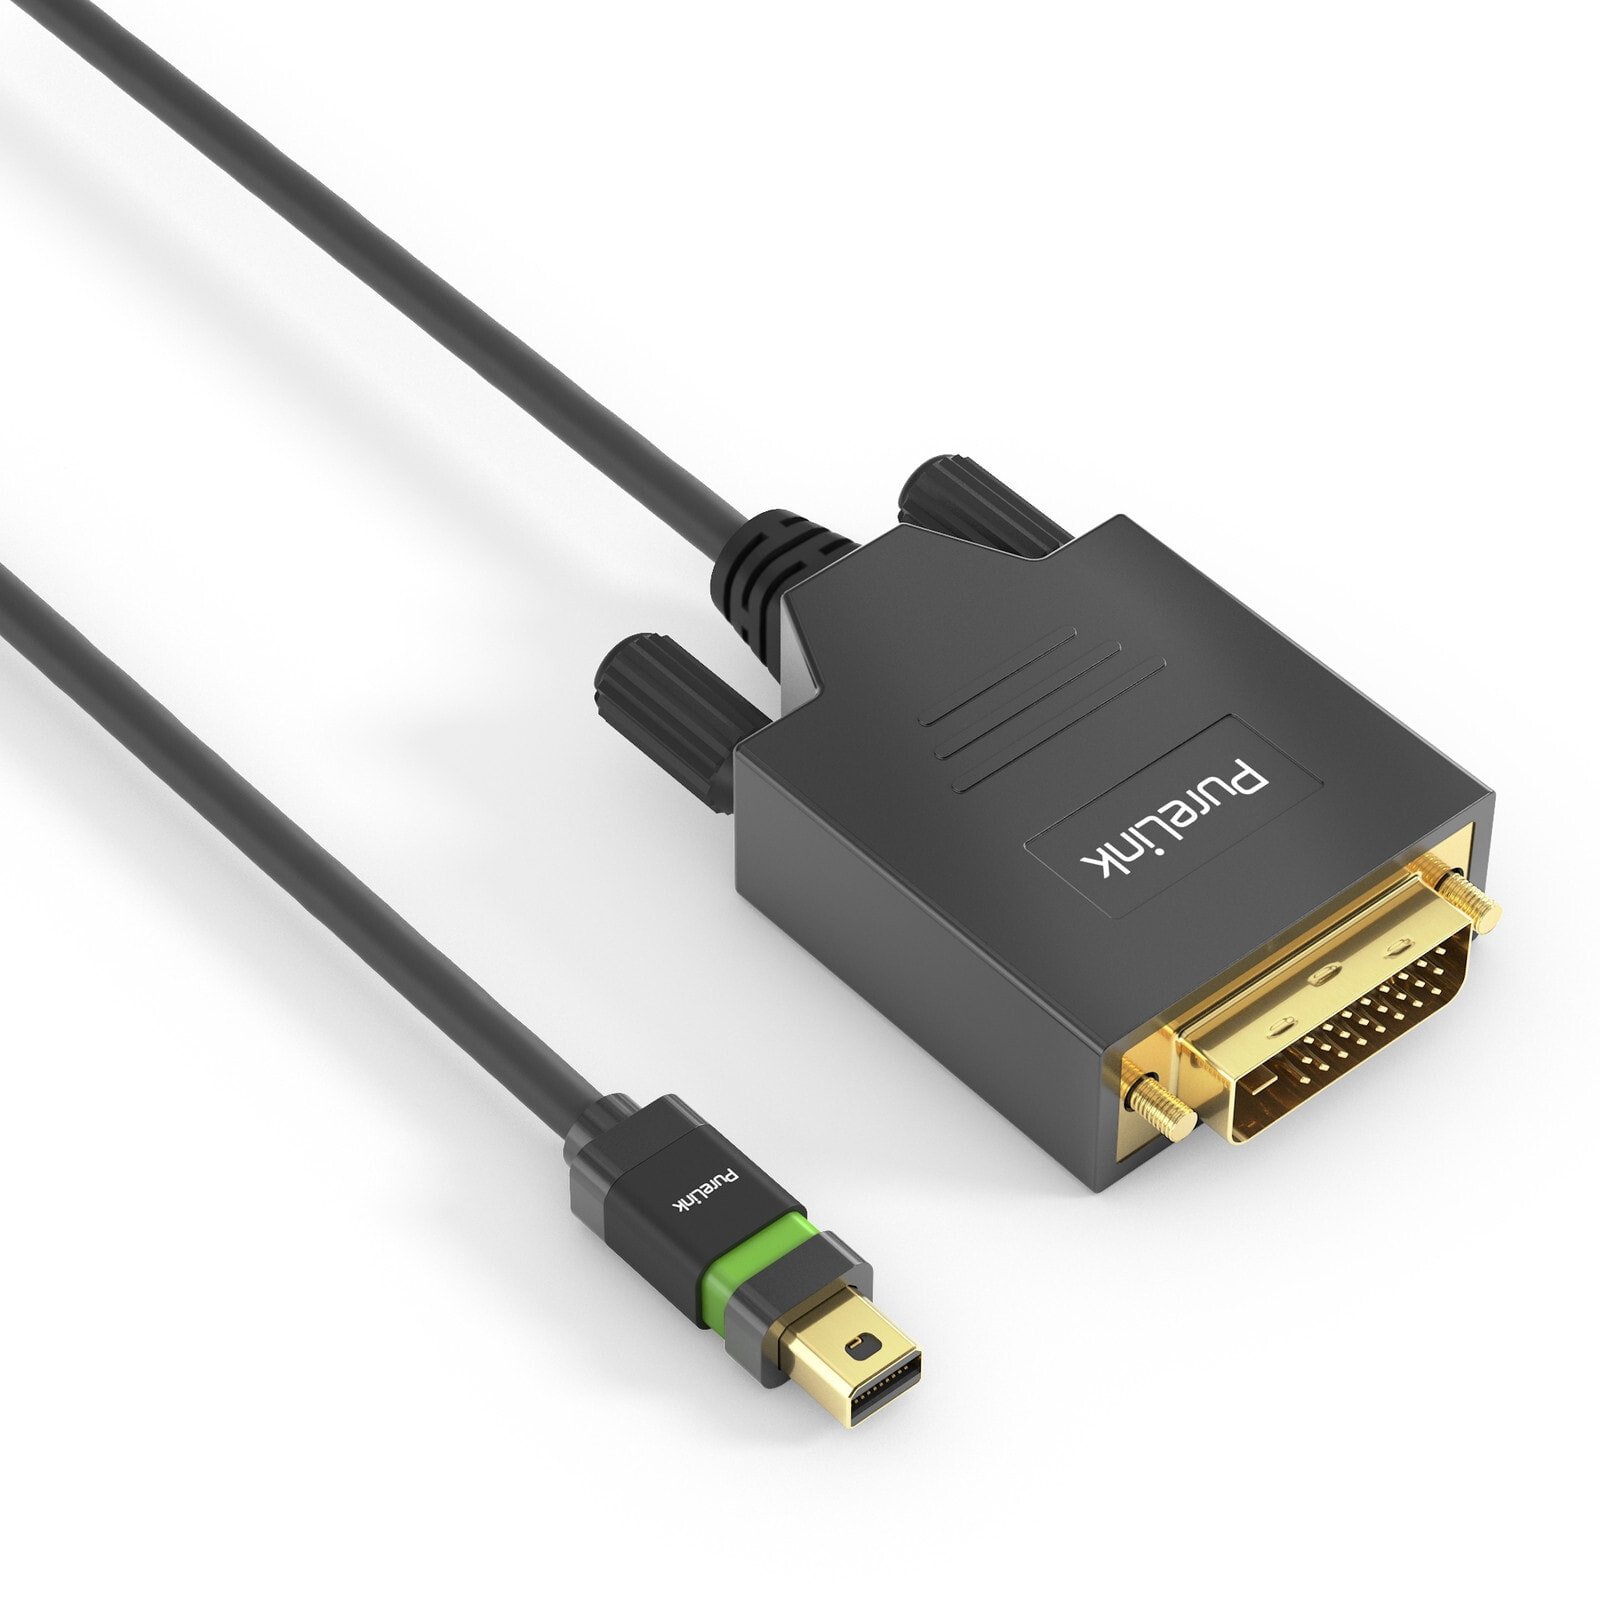 PureLink ULS2100-010 видео кабель адаптер 1 m Mini DisplayPort DVI Черный